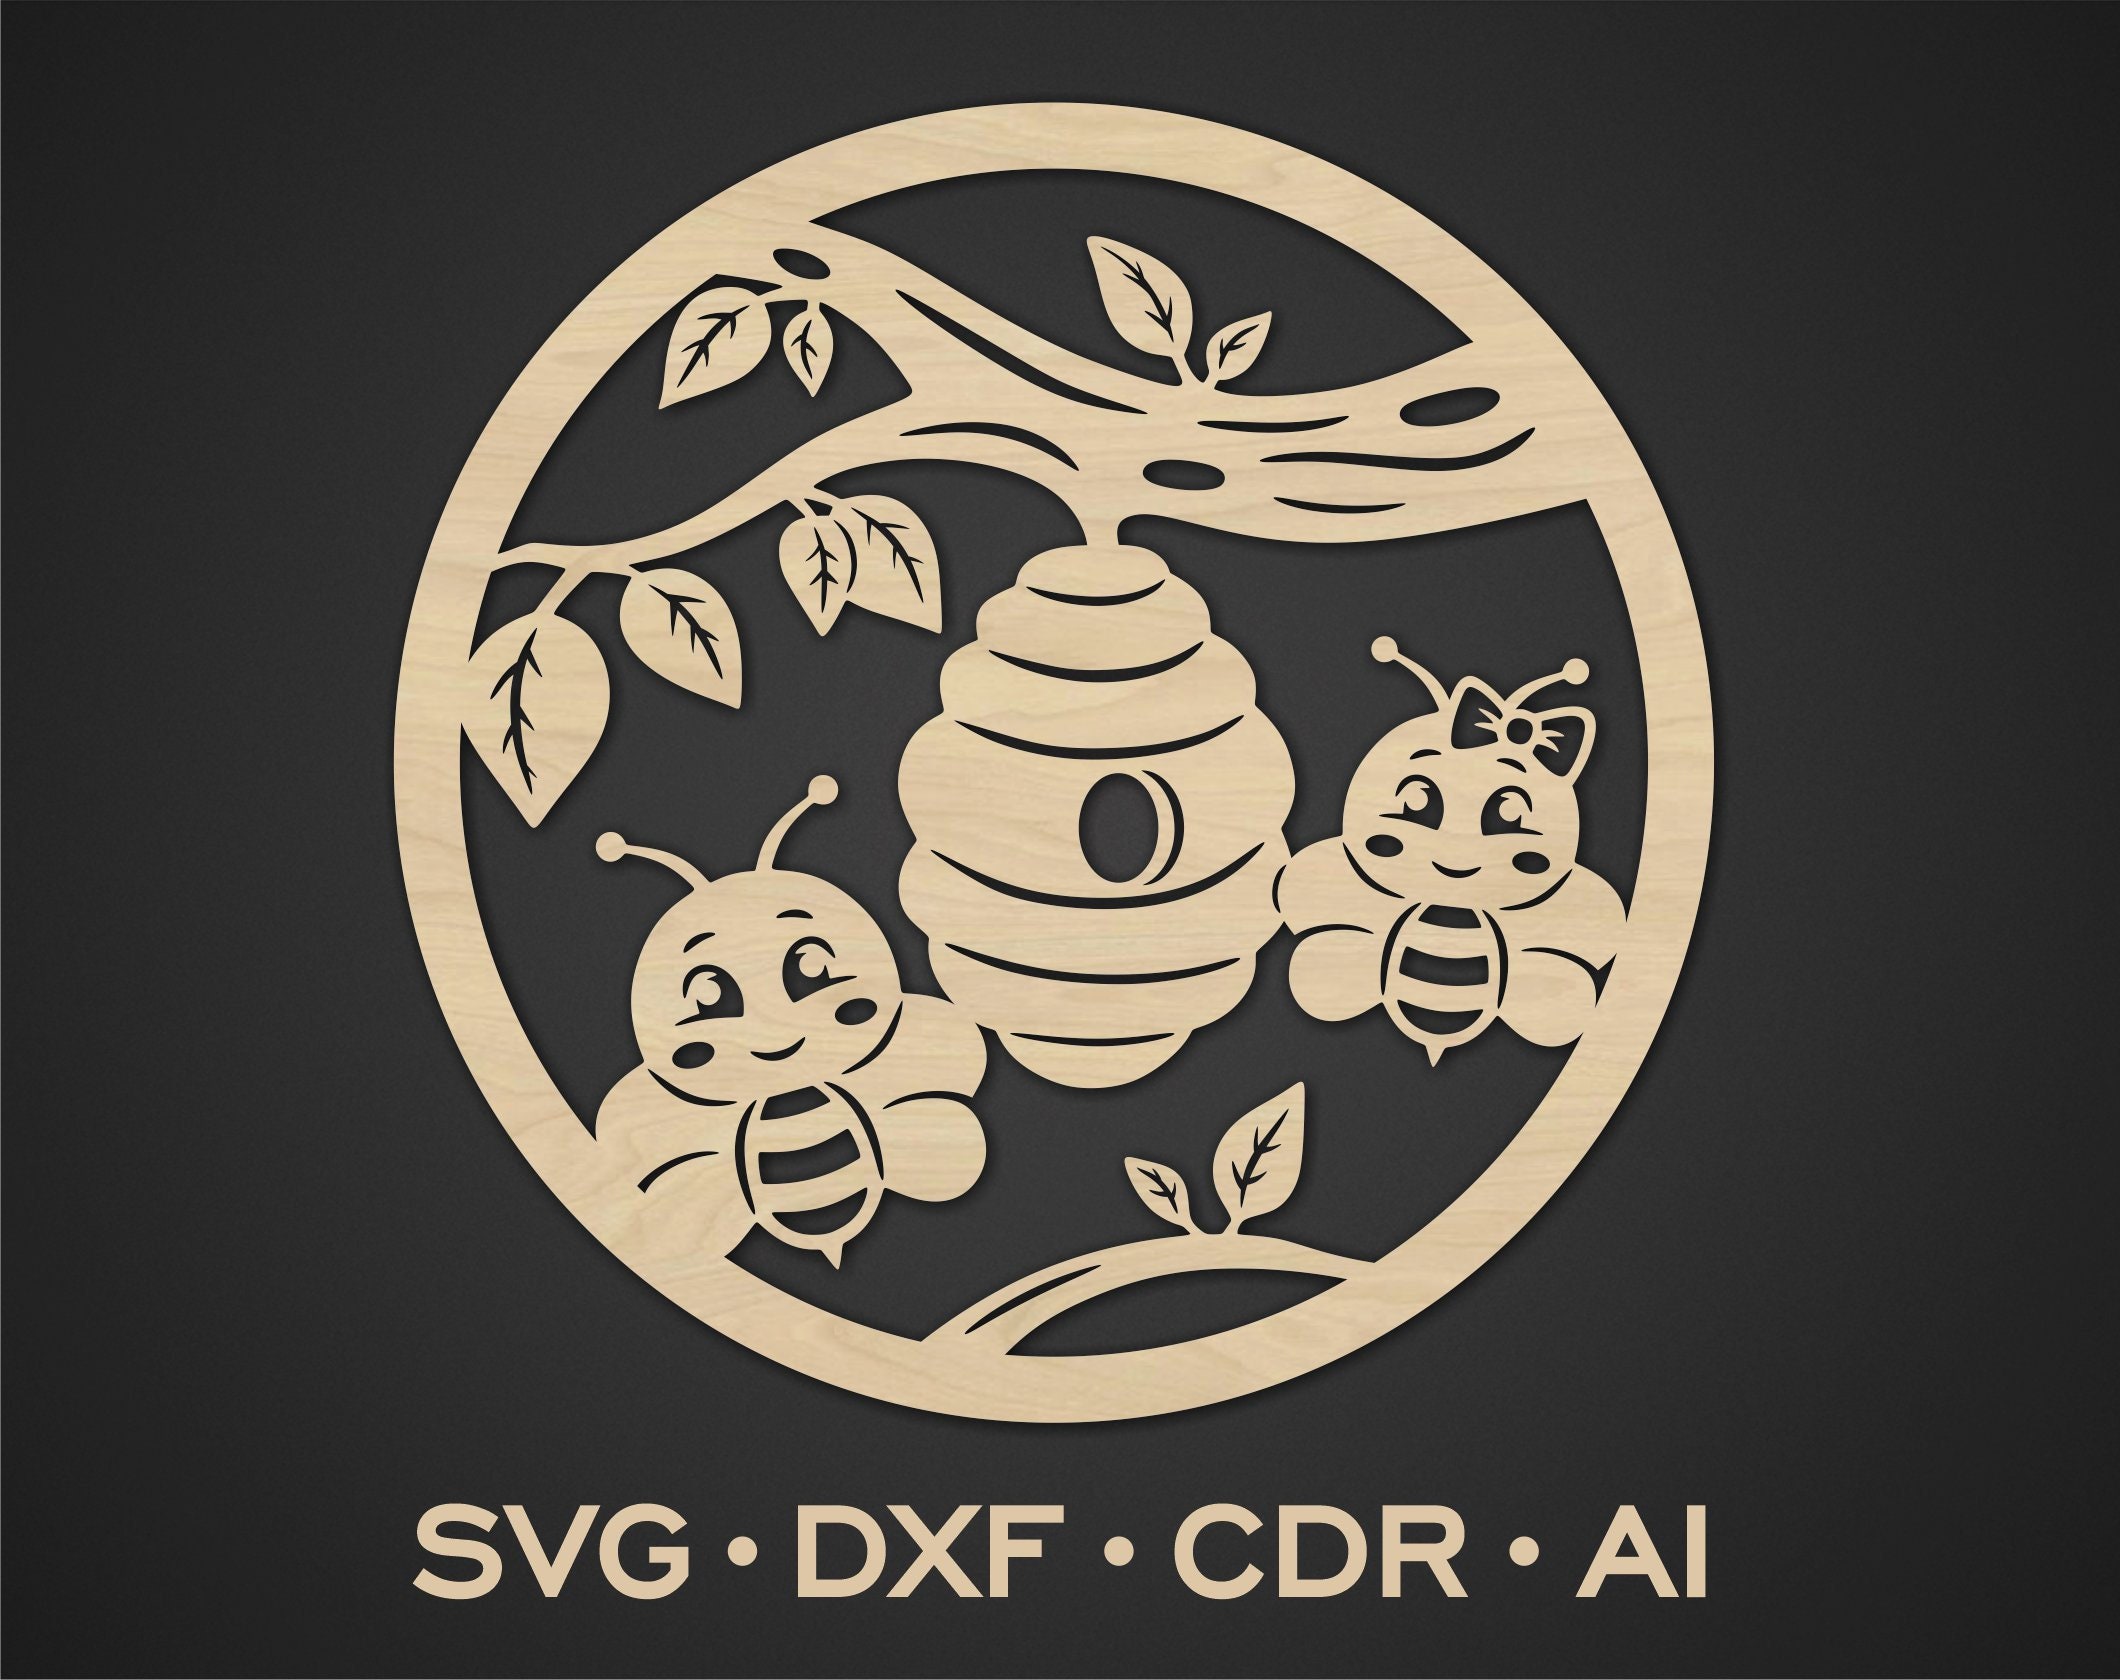 Beekeeper Studio Logo PNG vector in SVG, PDF, AI, CDR format